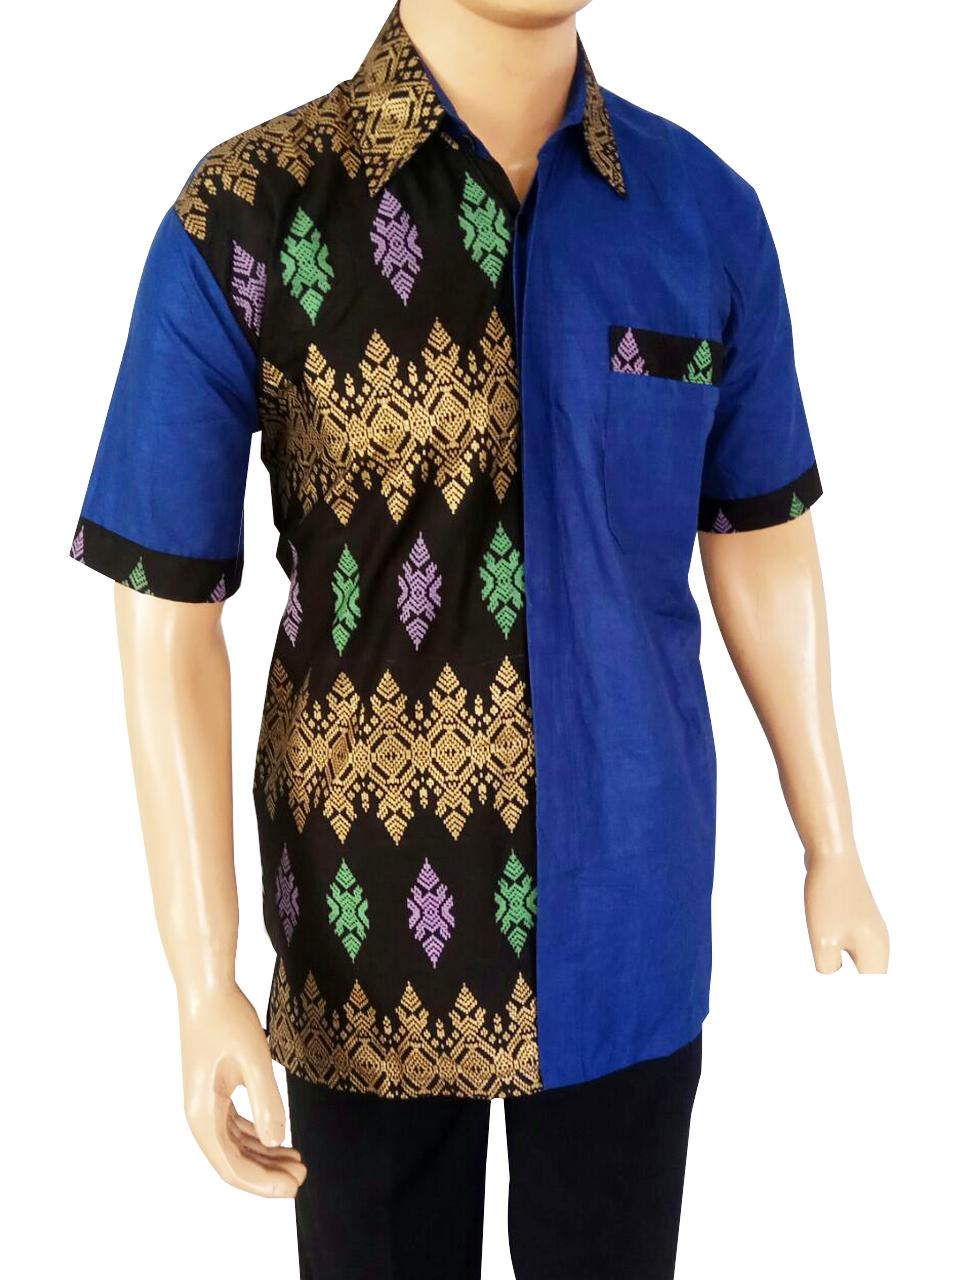 BELI Model Baju Batik Ukuran Jumbo XXL Baju Batik Besar Kemeja Batik